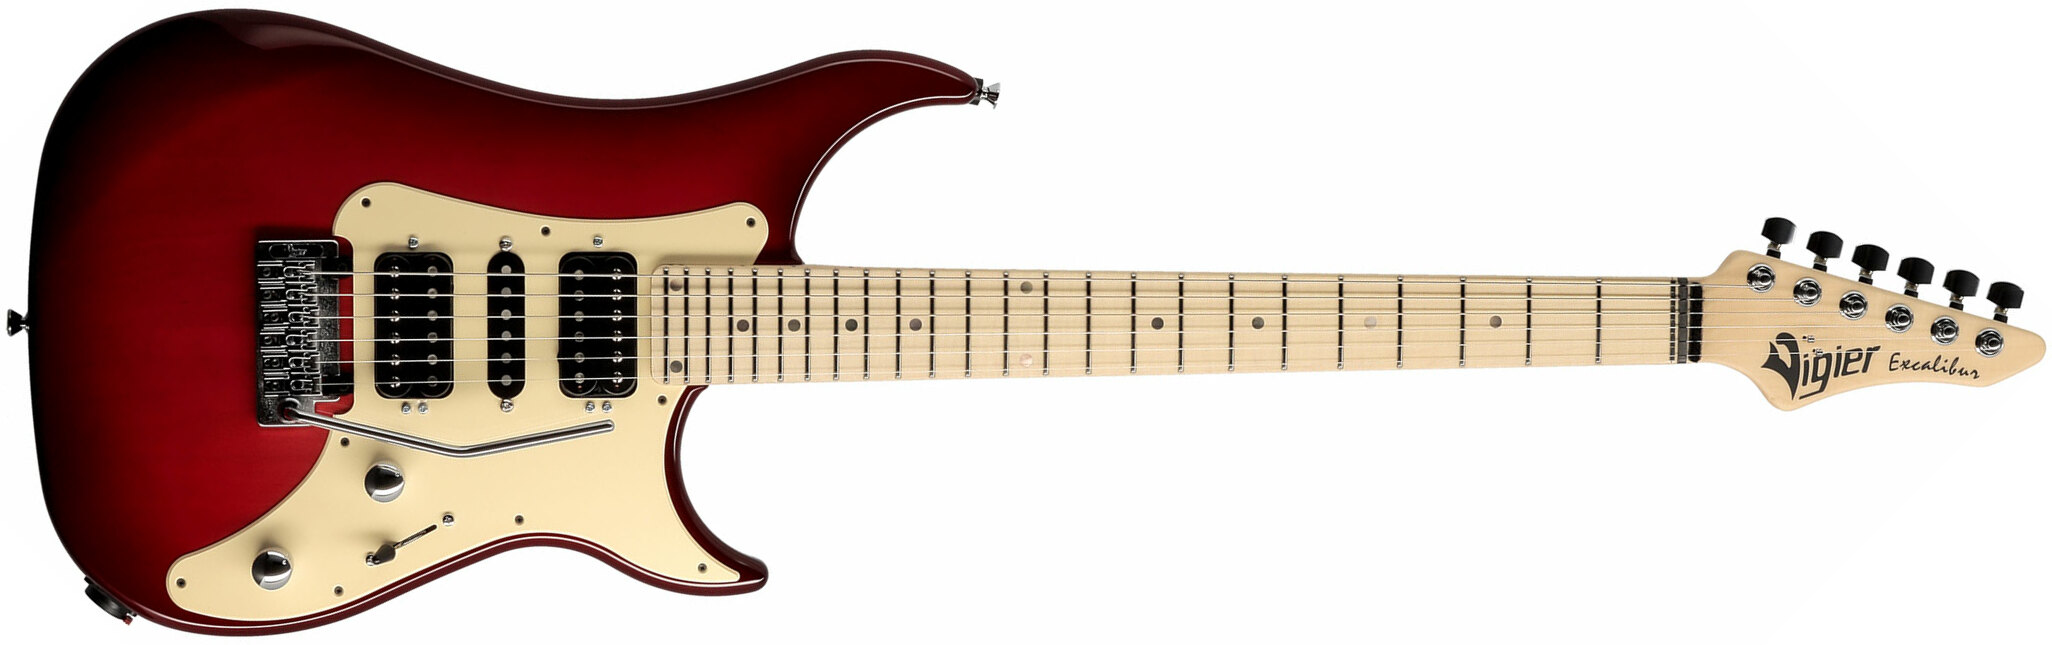 Vigier Excalibur Supraa Hsh Trem Mn - Clear Red - E-Gitarre in Str-Form - Main picture